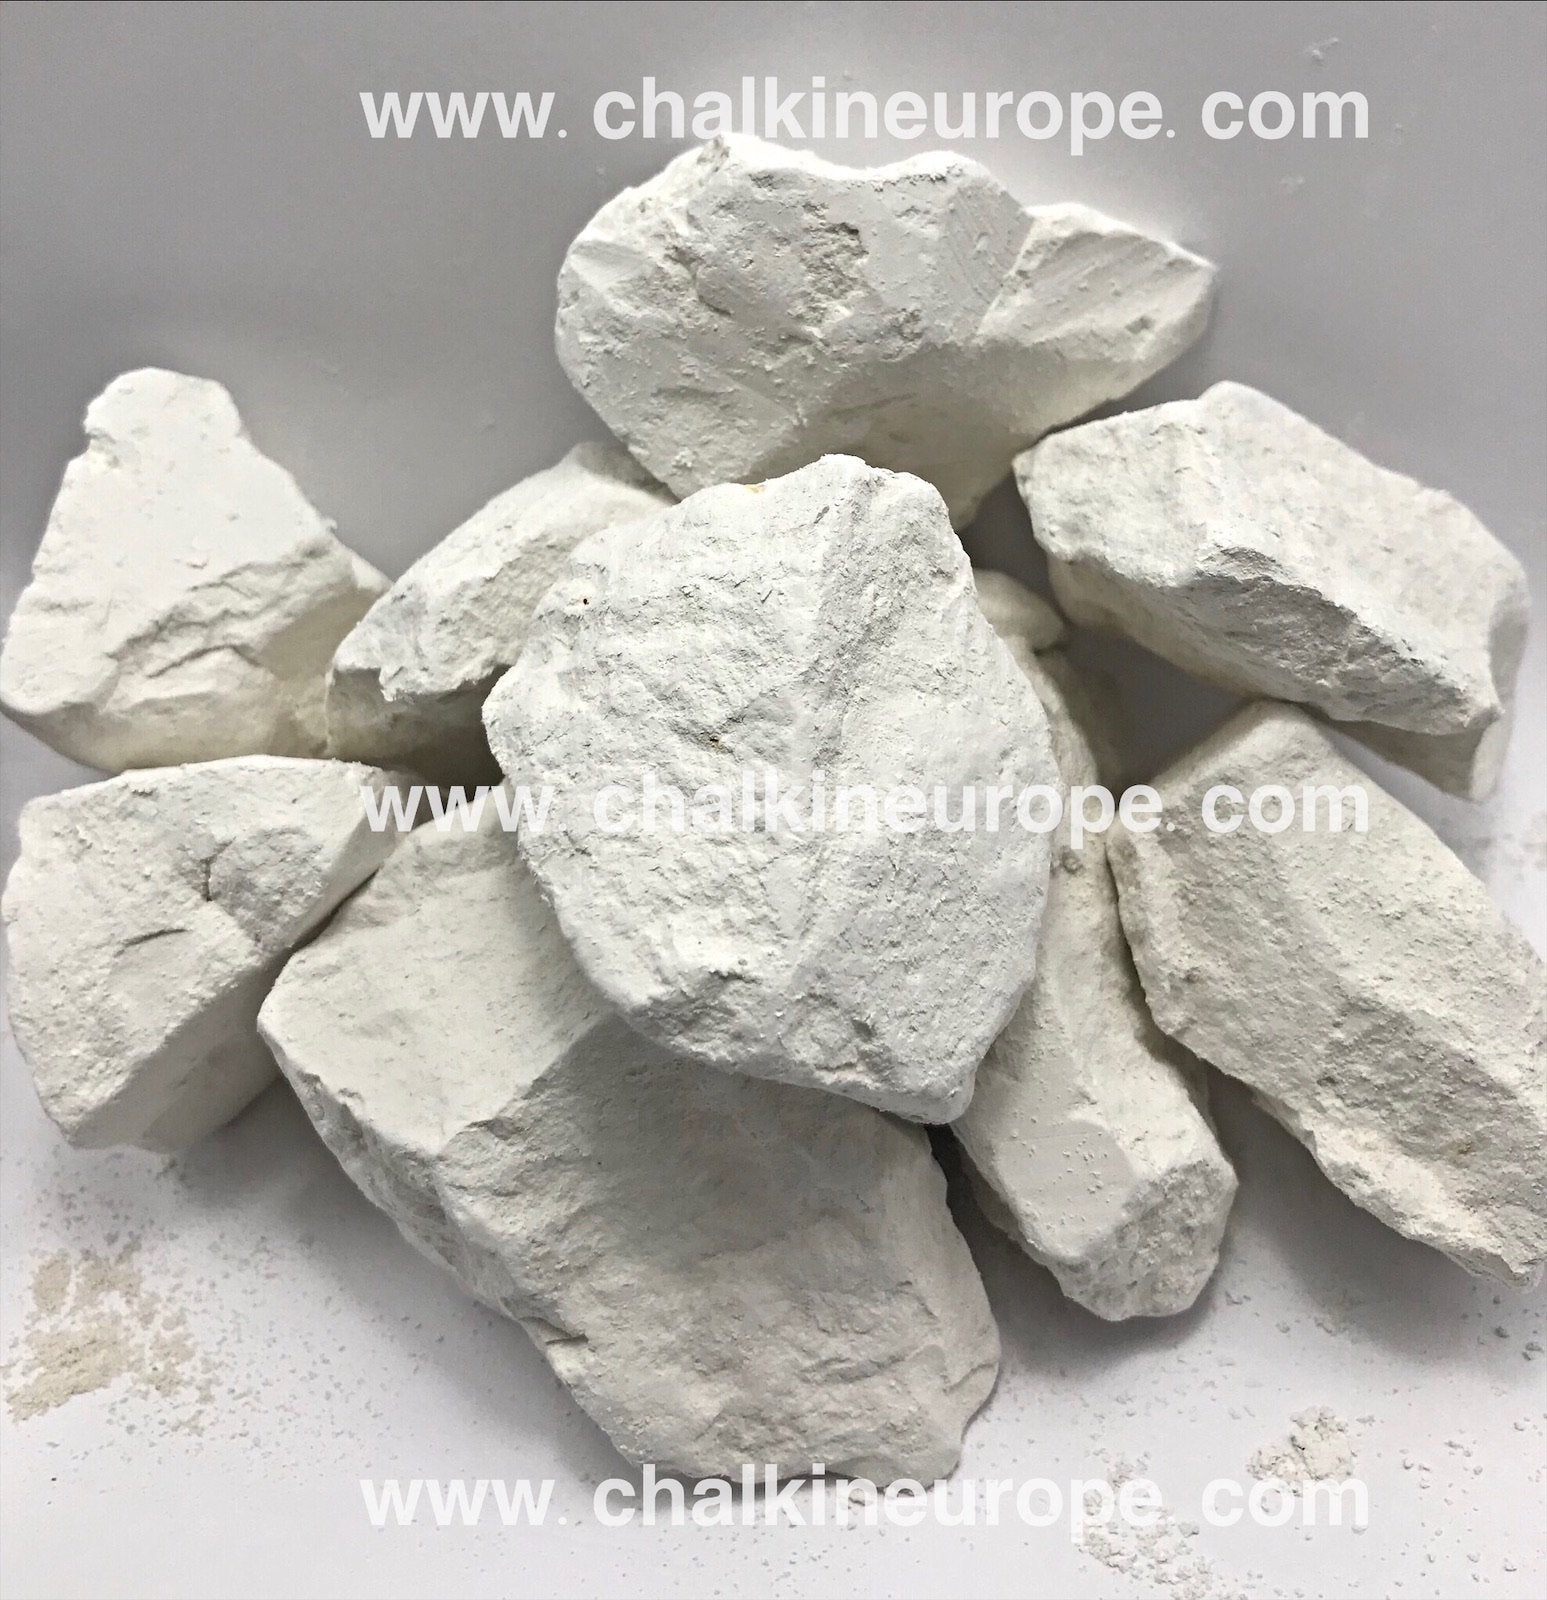 Snowball chalk - Chalkineurope